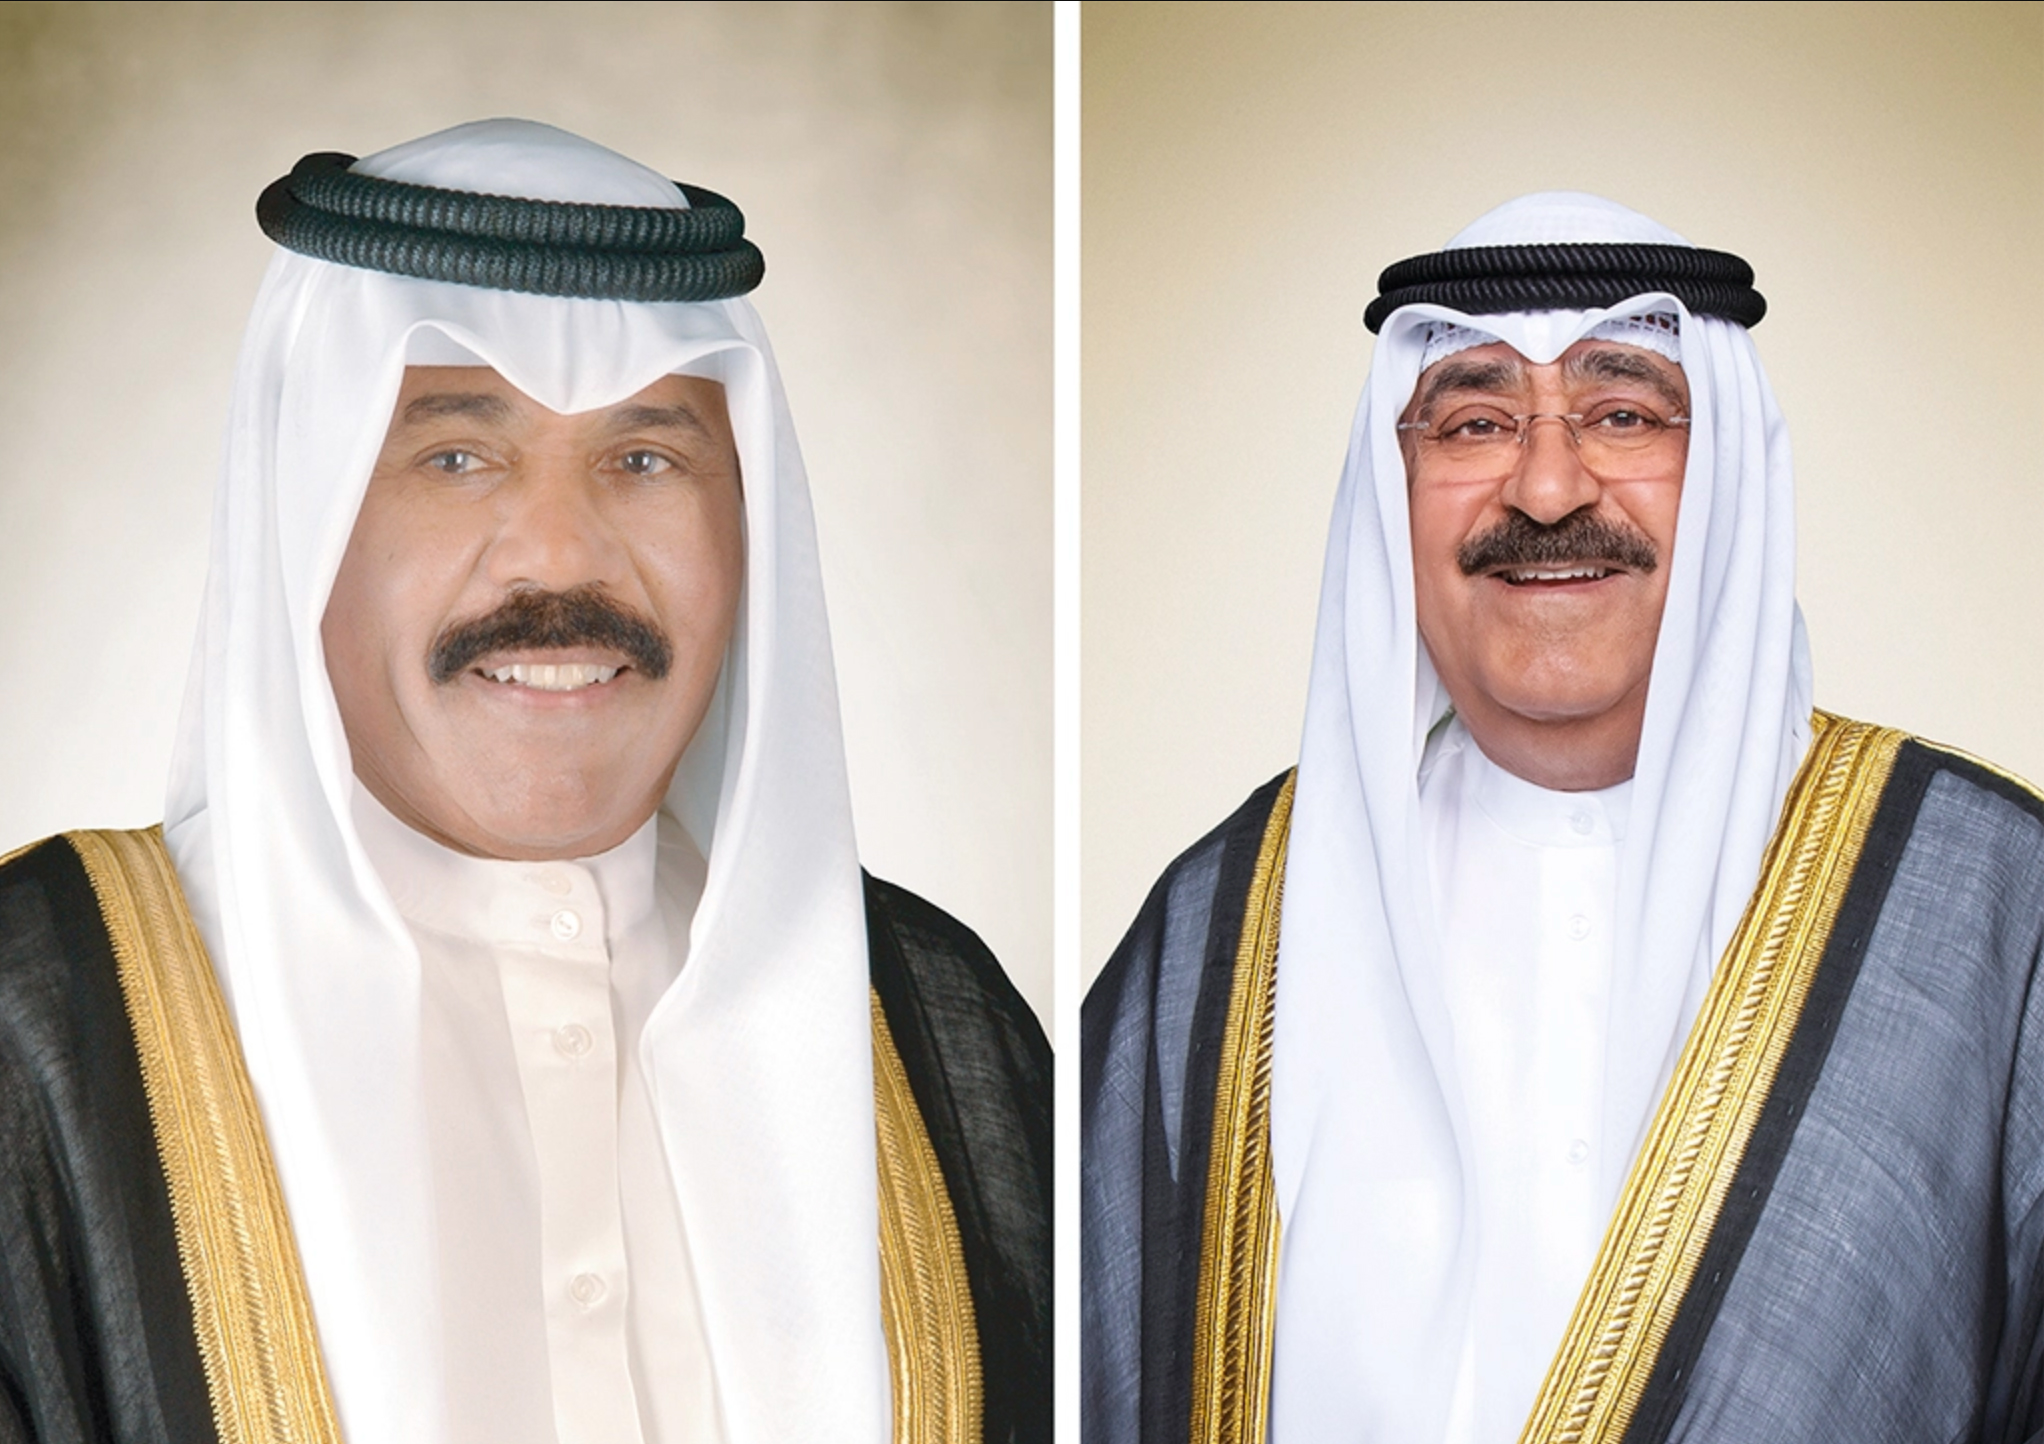 His Highness the Amir Sheikh Nawaf Al-Ahmad Al-Jaber Al-Sabah and His Highness the Crown Prince Sheikh Mishal Al-Ahmad Al-Jaber Al-Sabah.